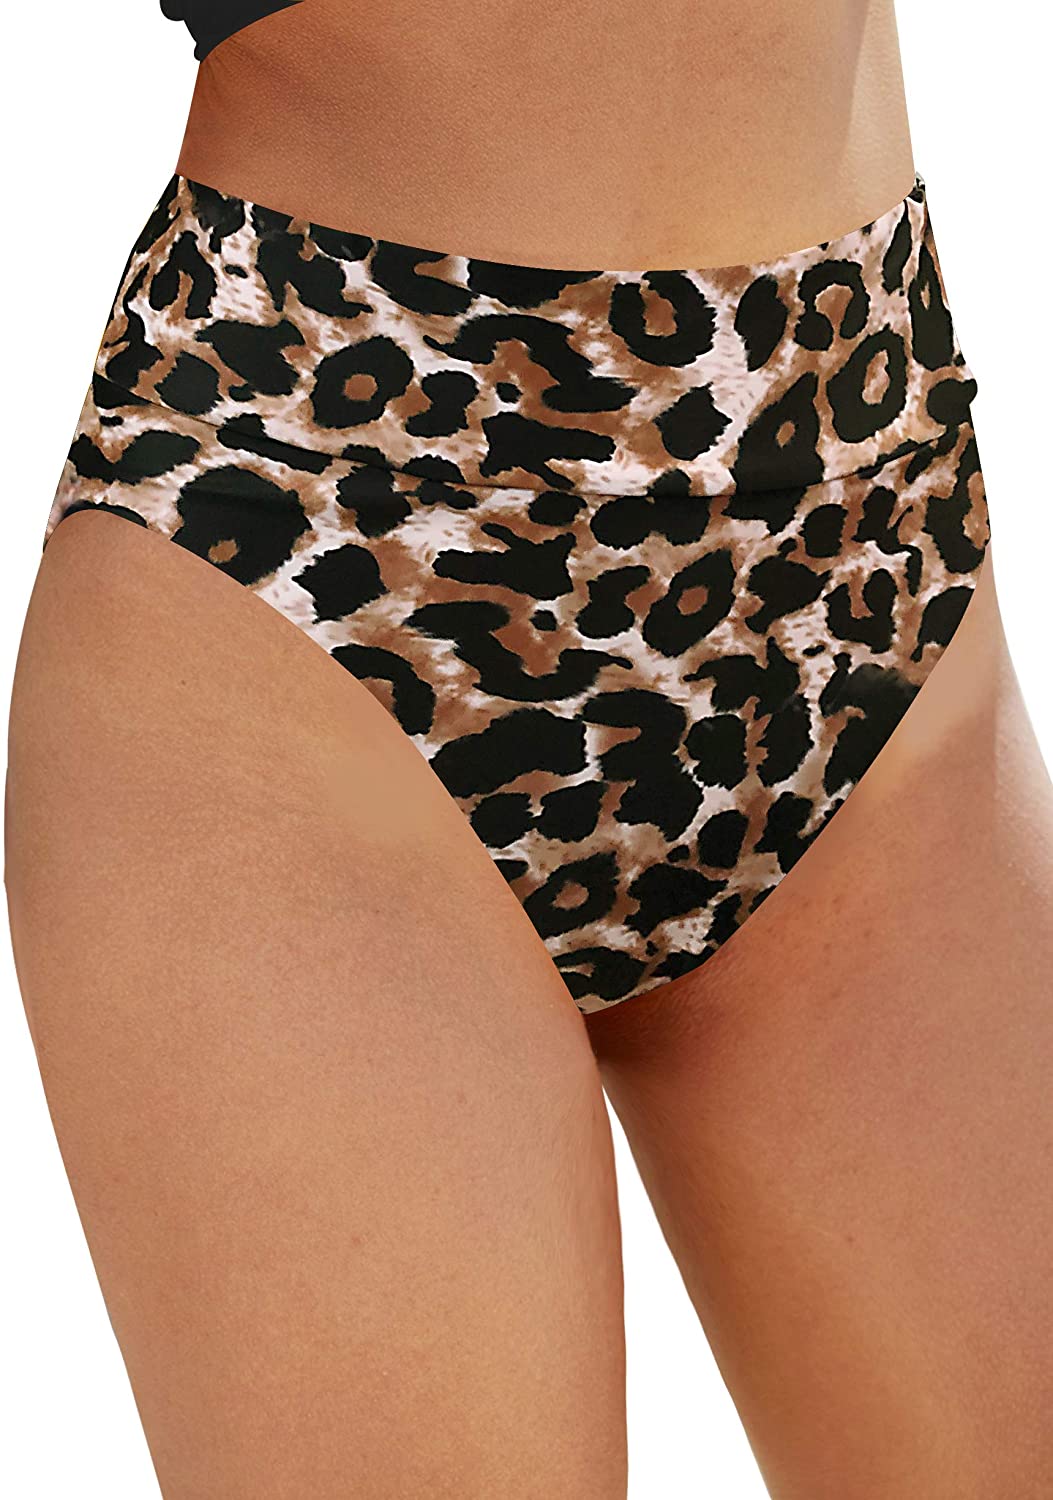 thumbnail 9 - Upopby Women&#039;s Sexy High Cut Cheeky Bikini Bottom High Waisted Swimsuit Bottoms